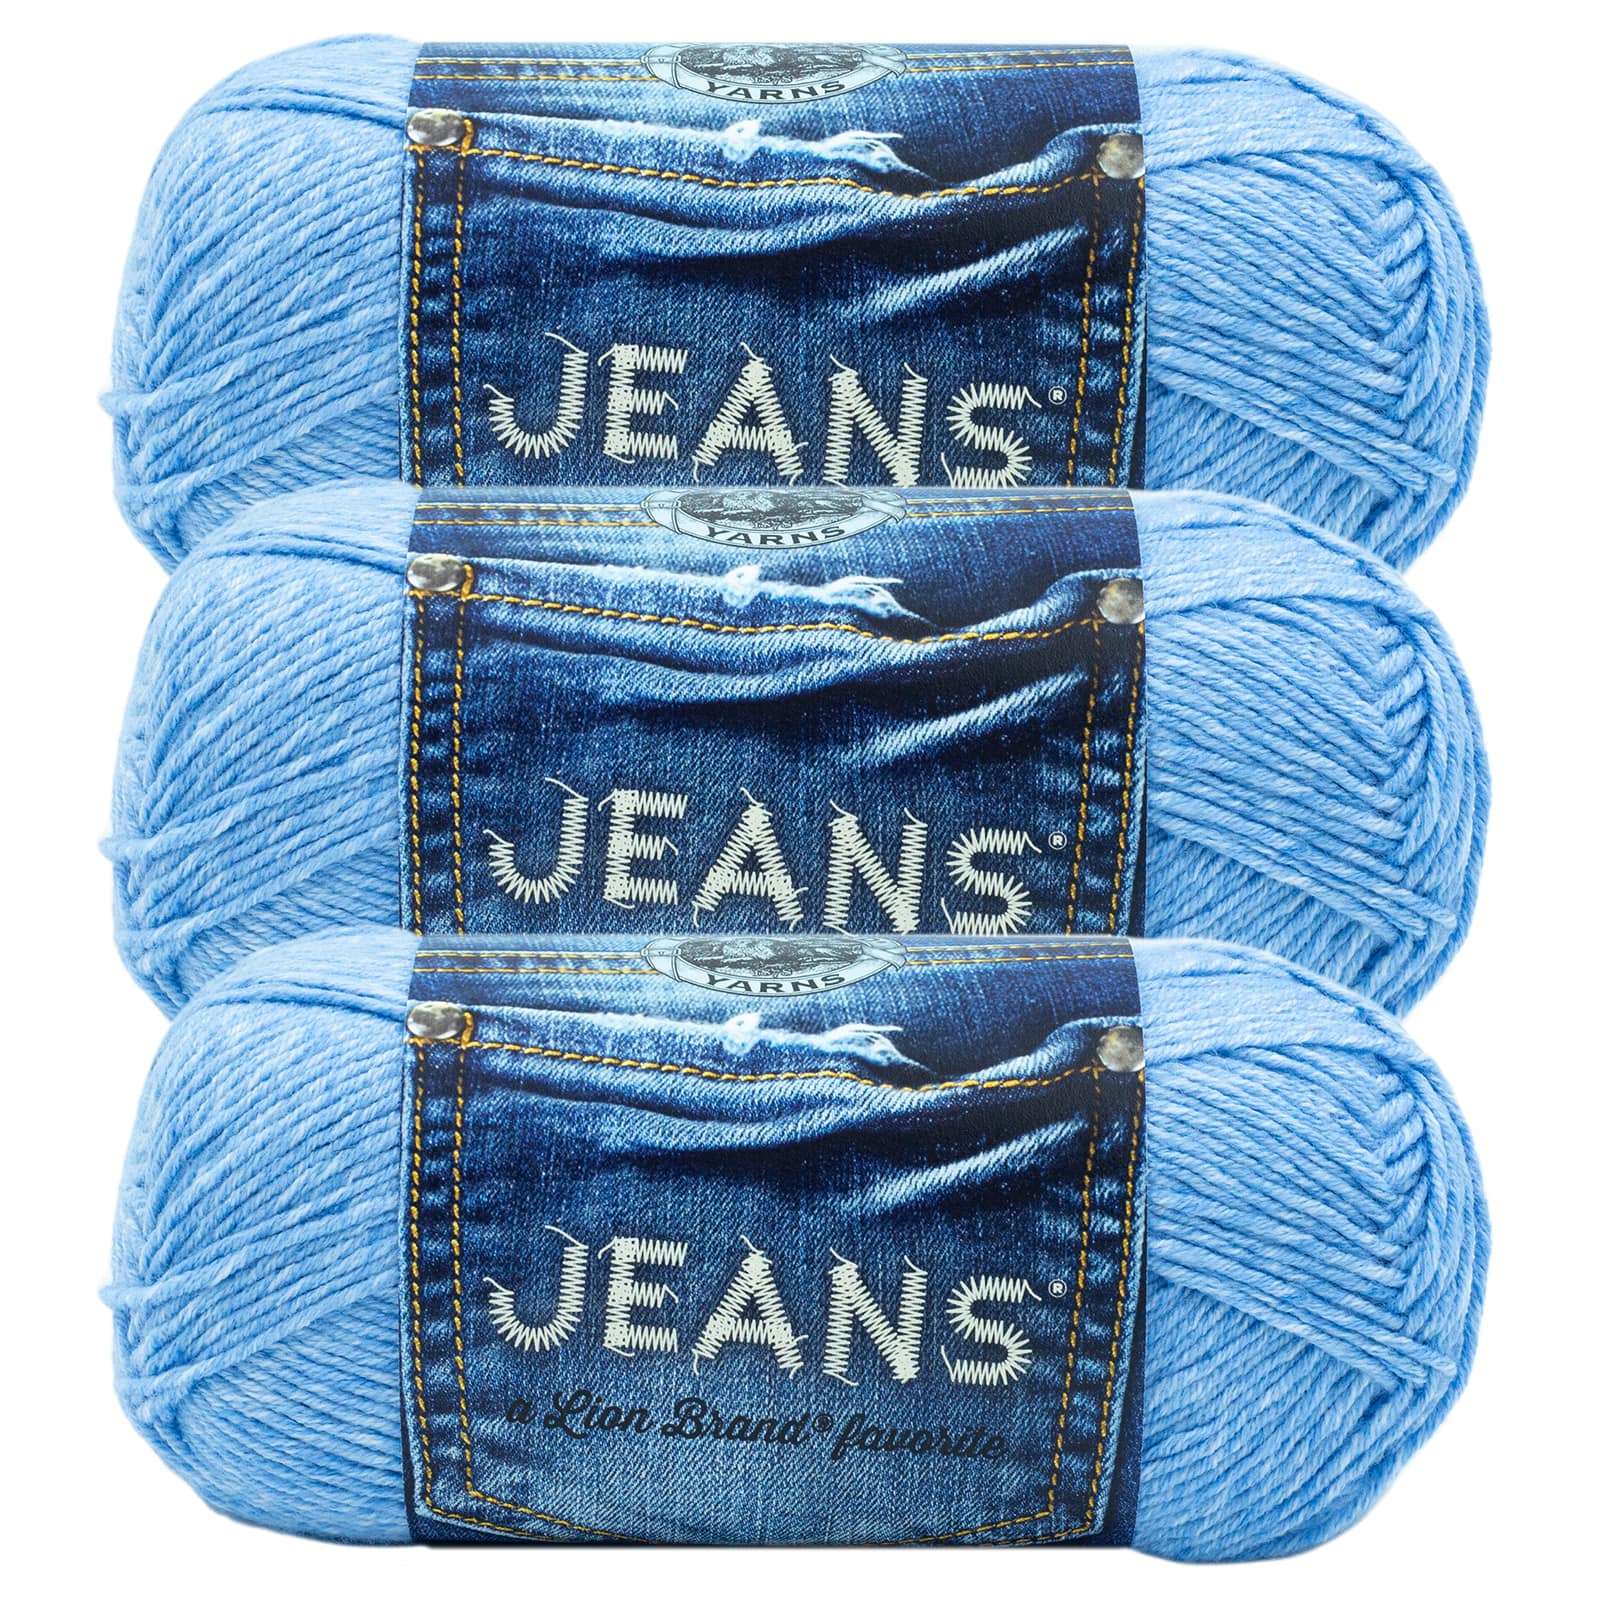 Lion Brand Yarn Ovillo de lana color jeans azul (Washington Denim), 1 cadejo